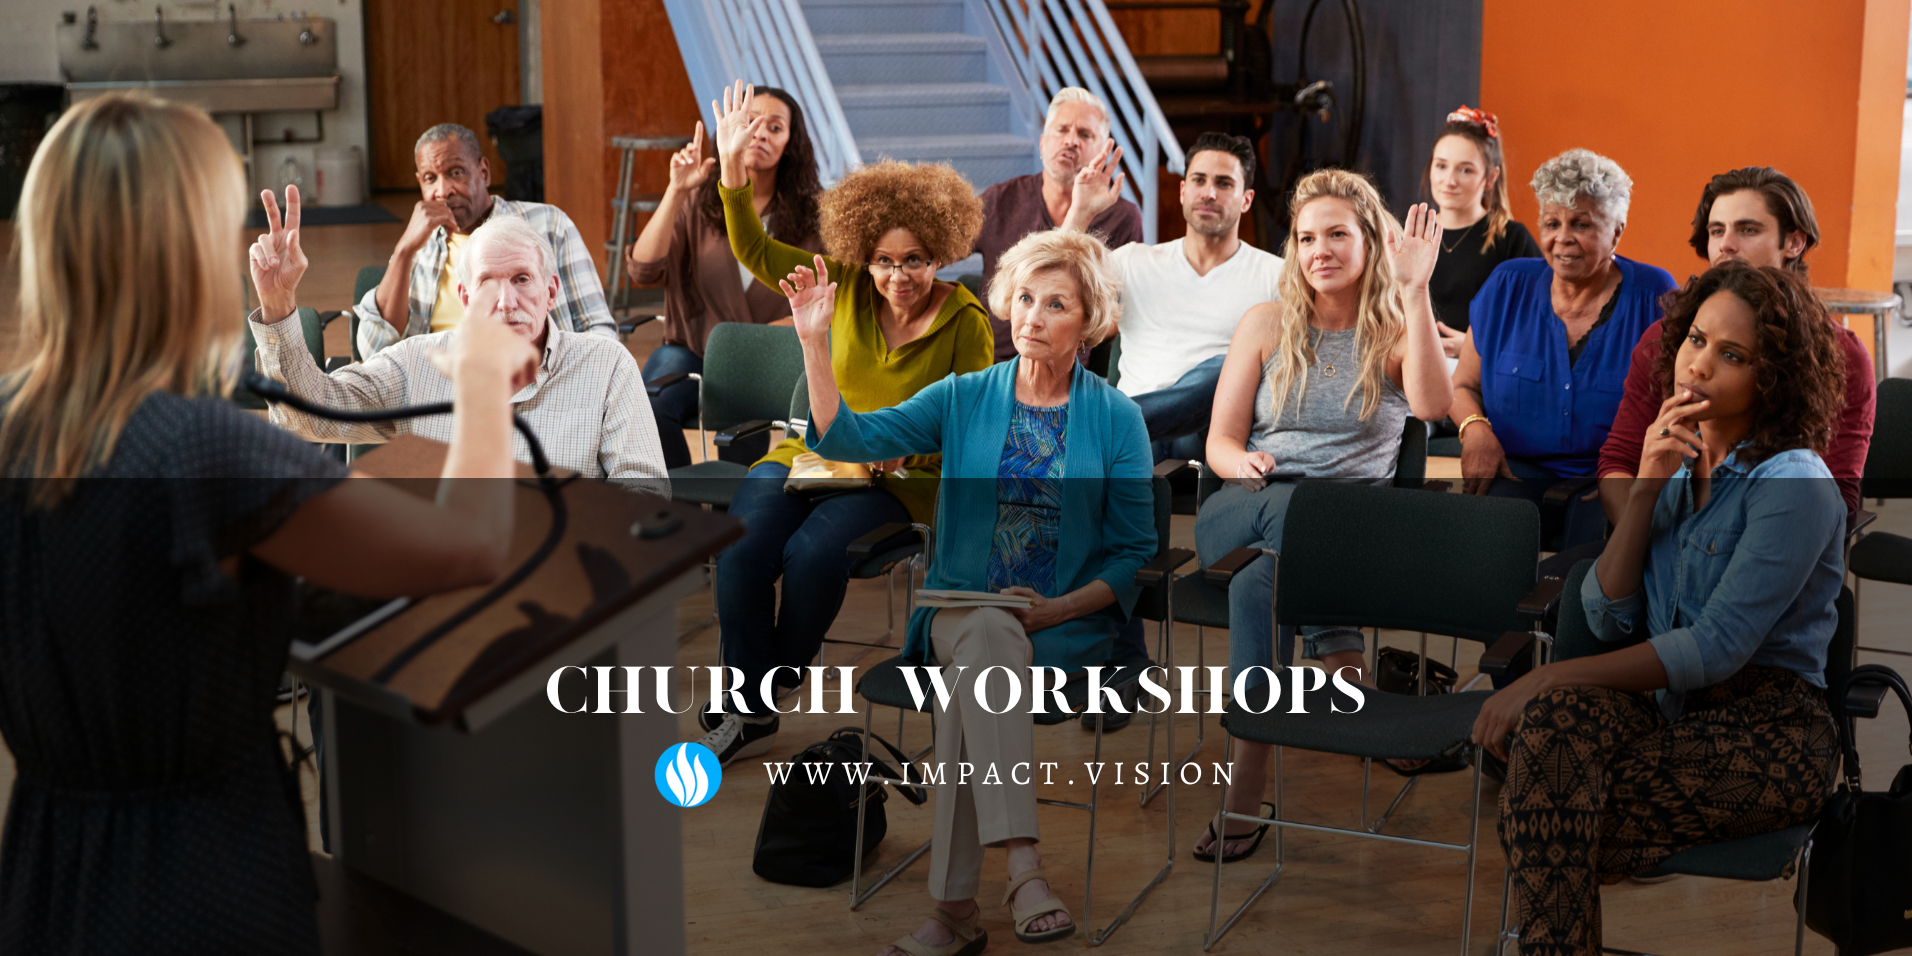 Church workshops